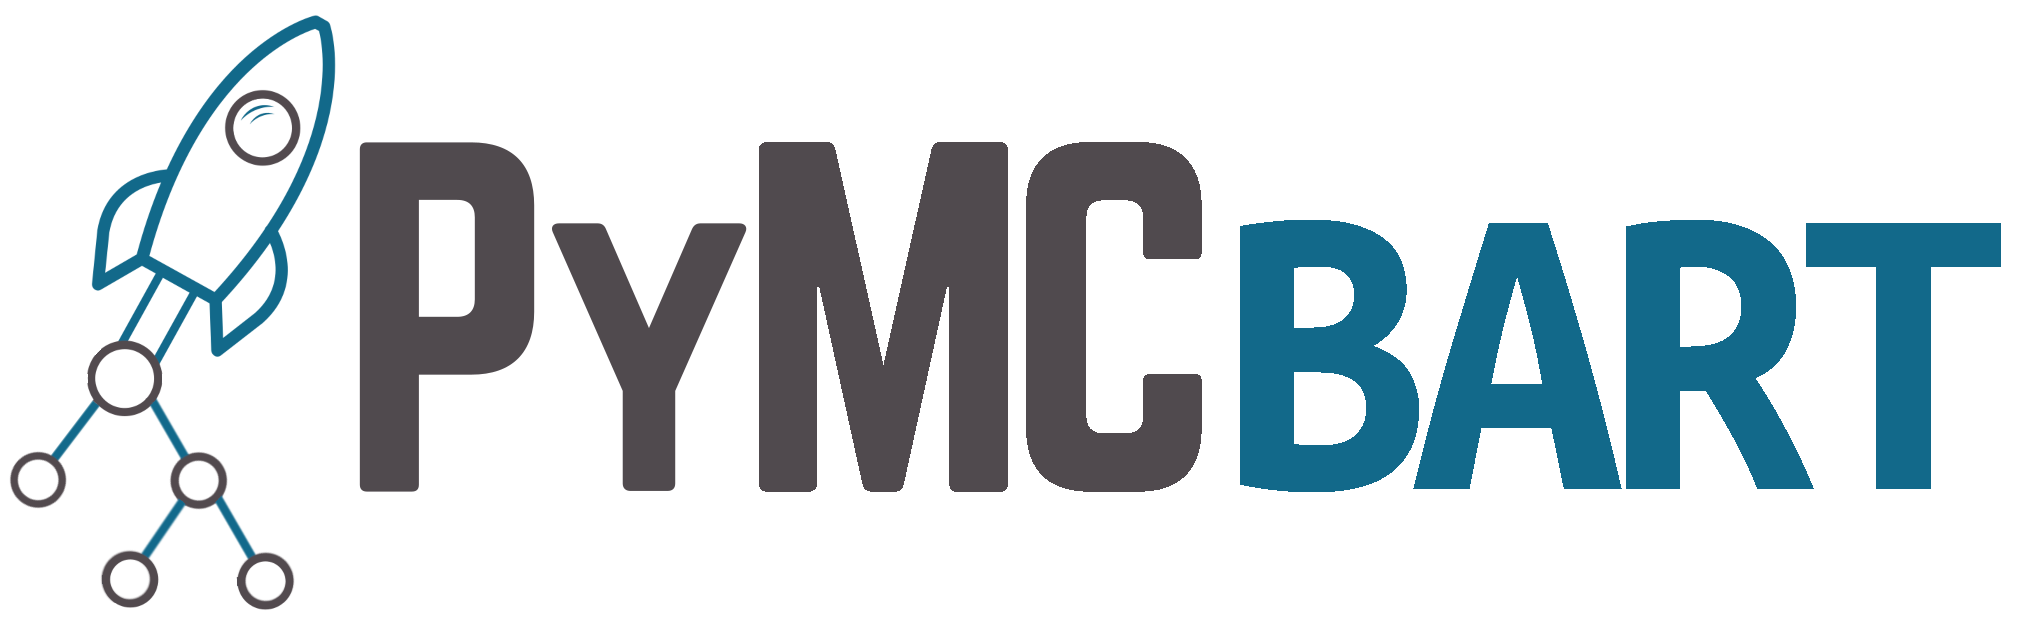 pymc-bart logo